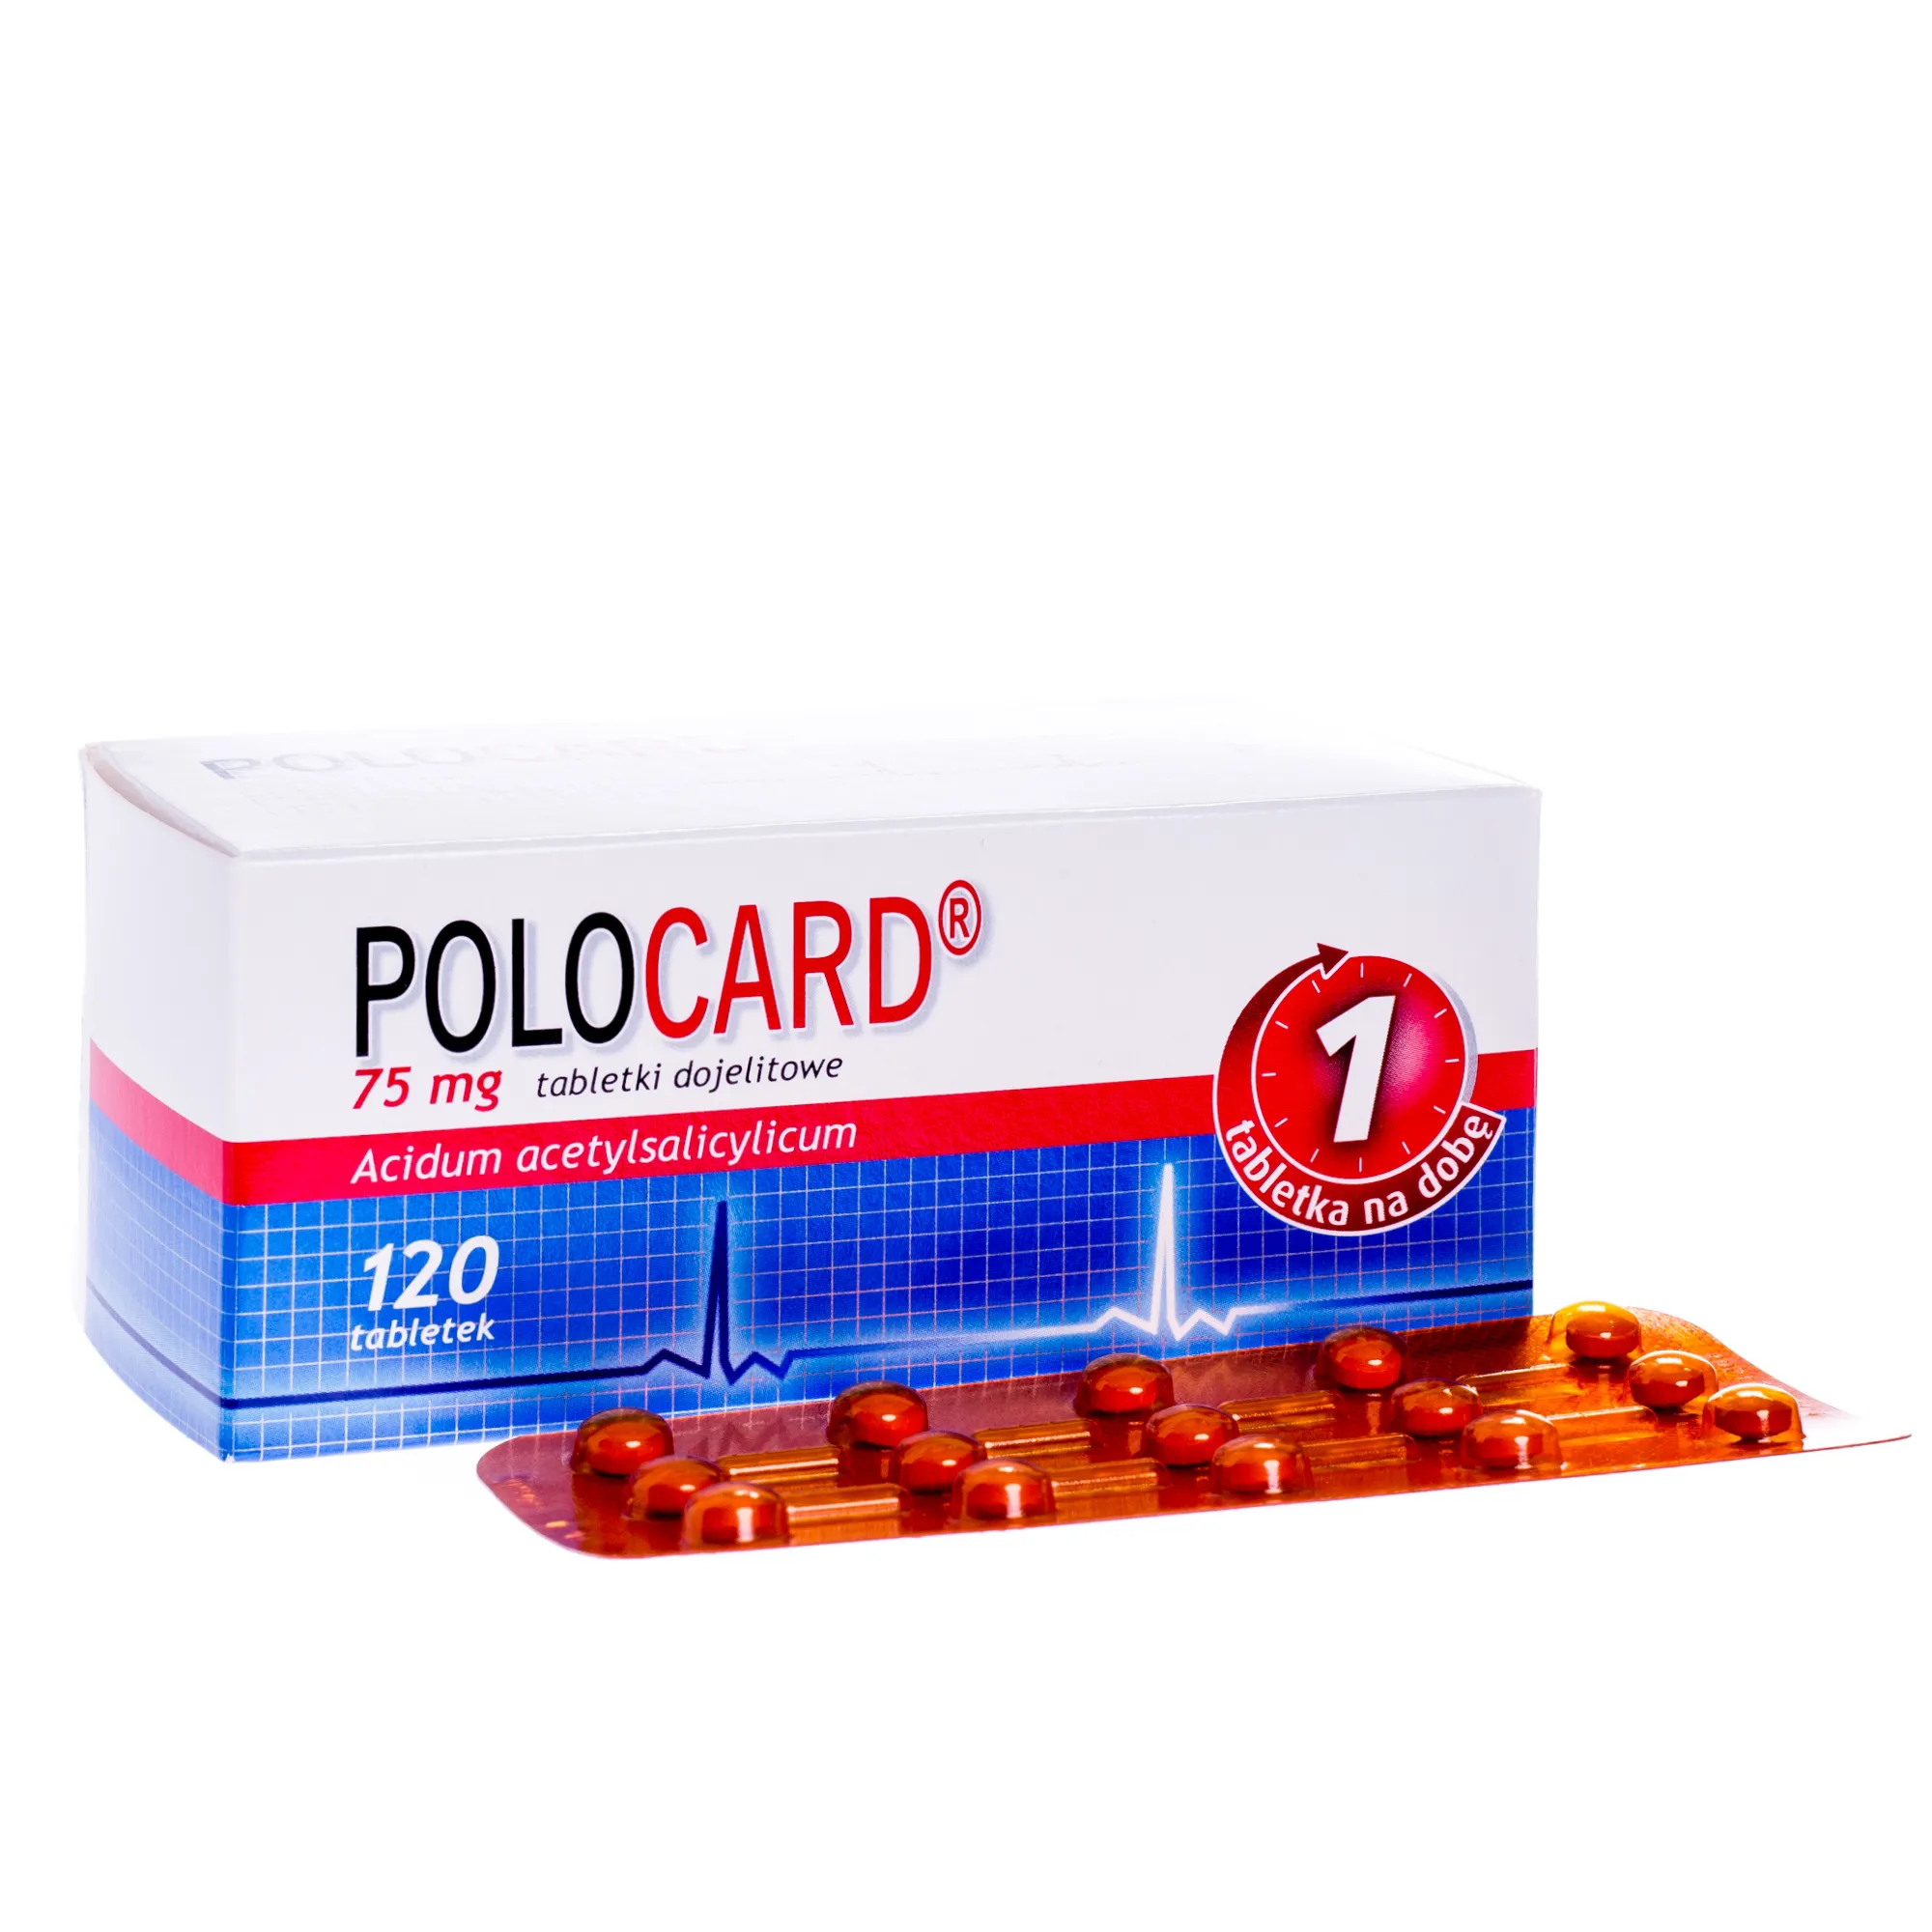 Polocard 75 mg, 120 tabletek 